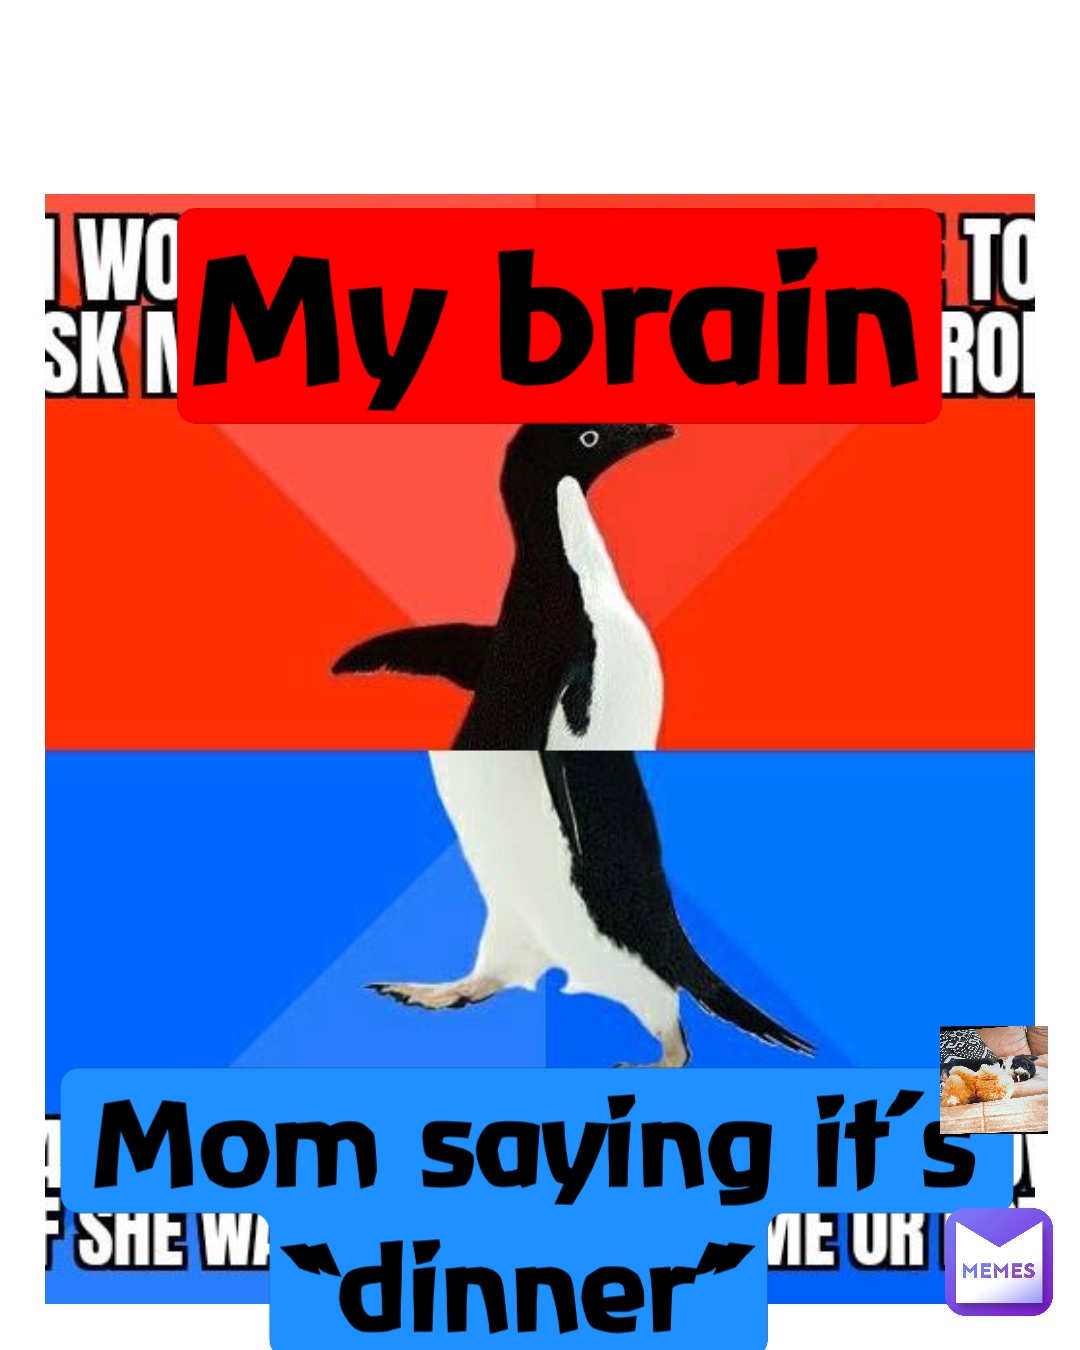 Mom saying it’s “dinner” My brain